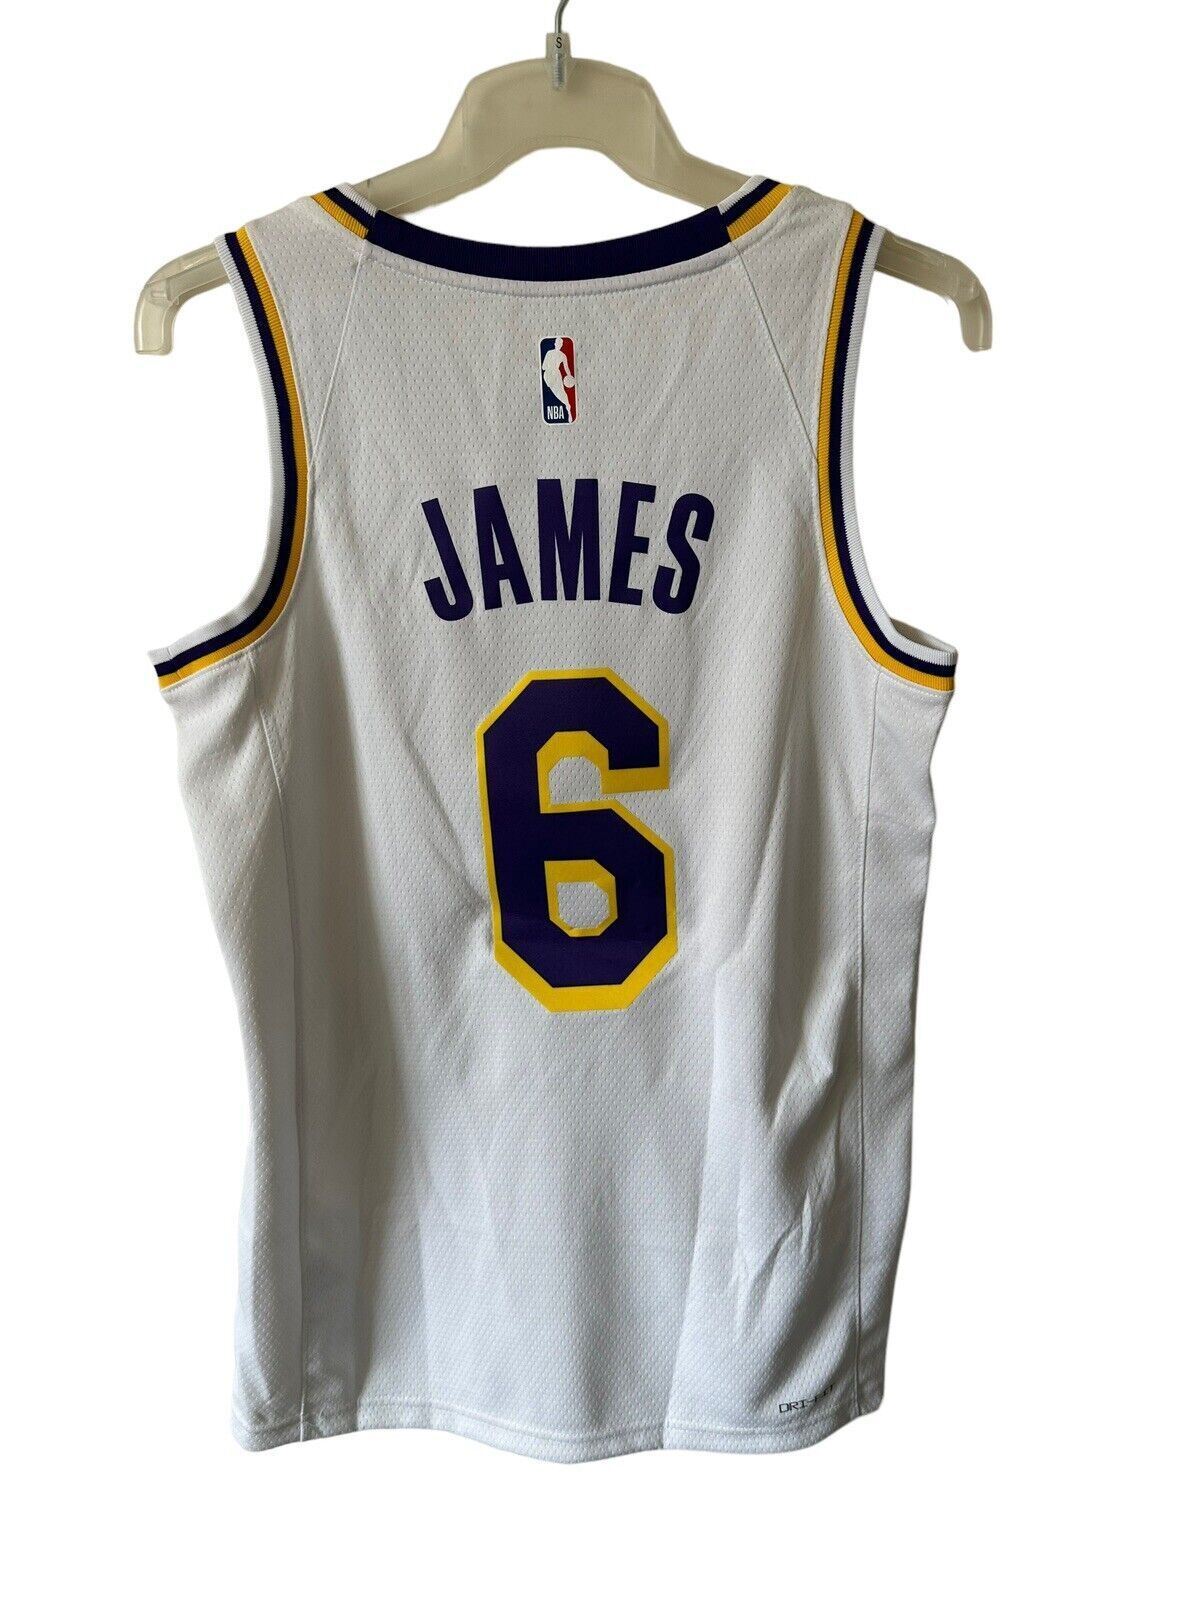 Nike NBA LA Lakers Swingman Edition Jersey JAMES 6 Basketball Men’s Small